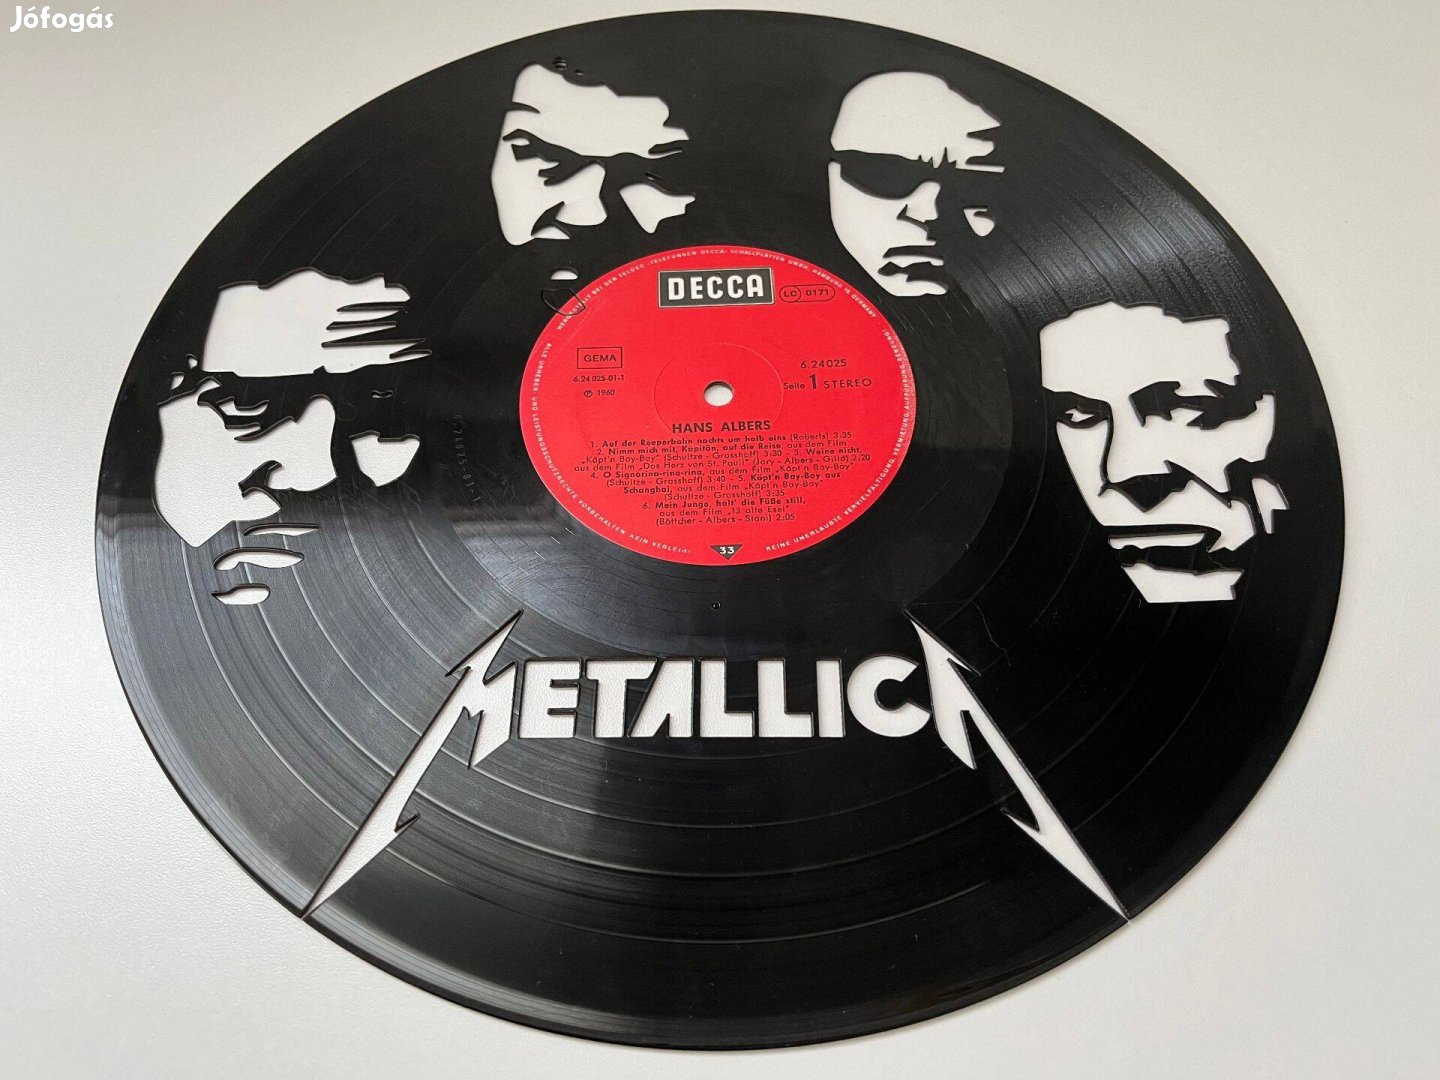 Metallica bakelit falikép, vinyl dekor